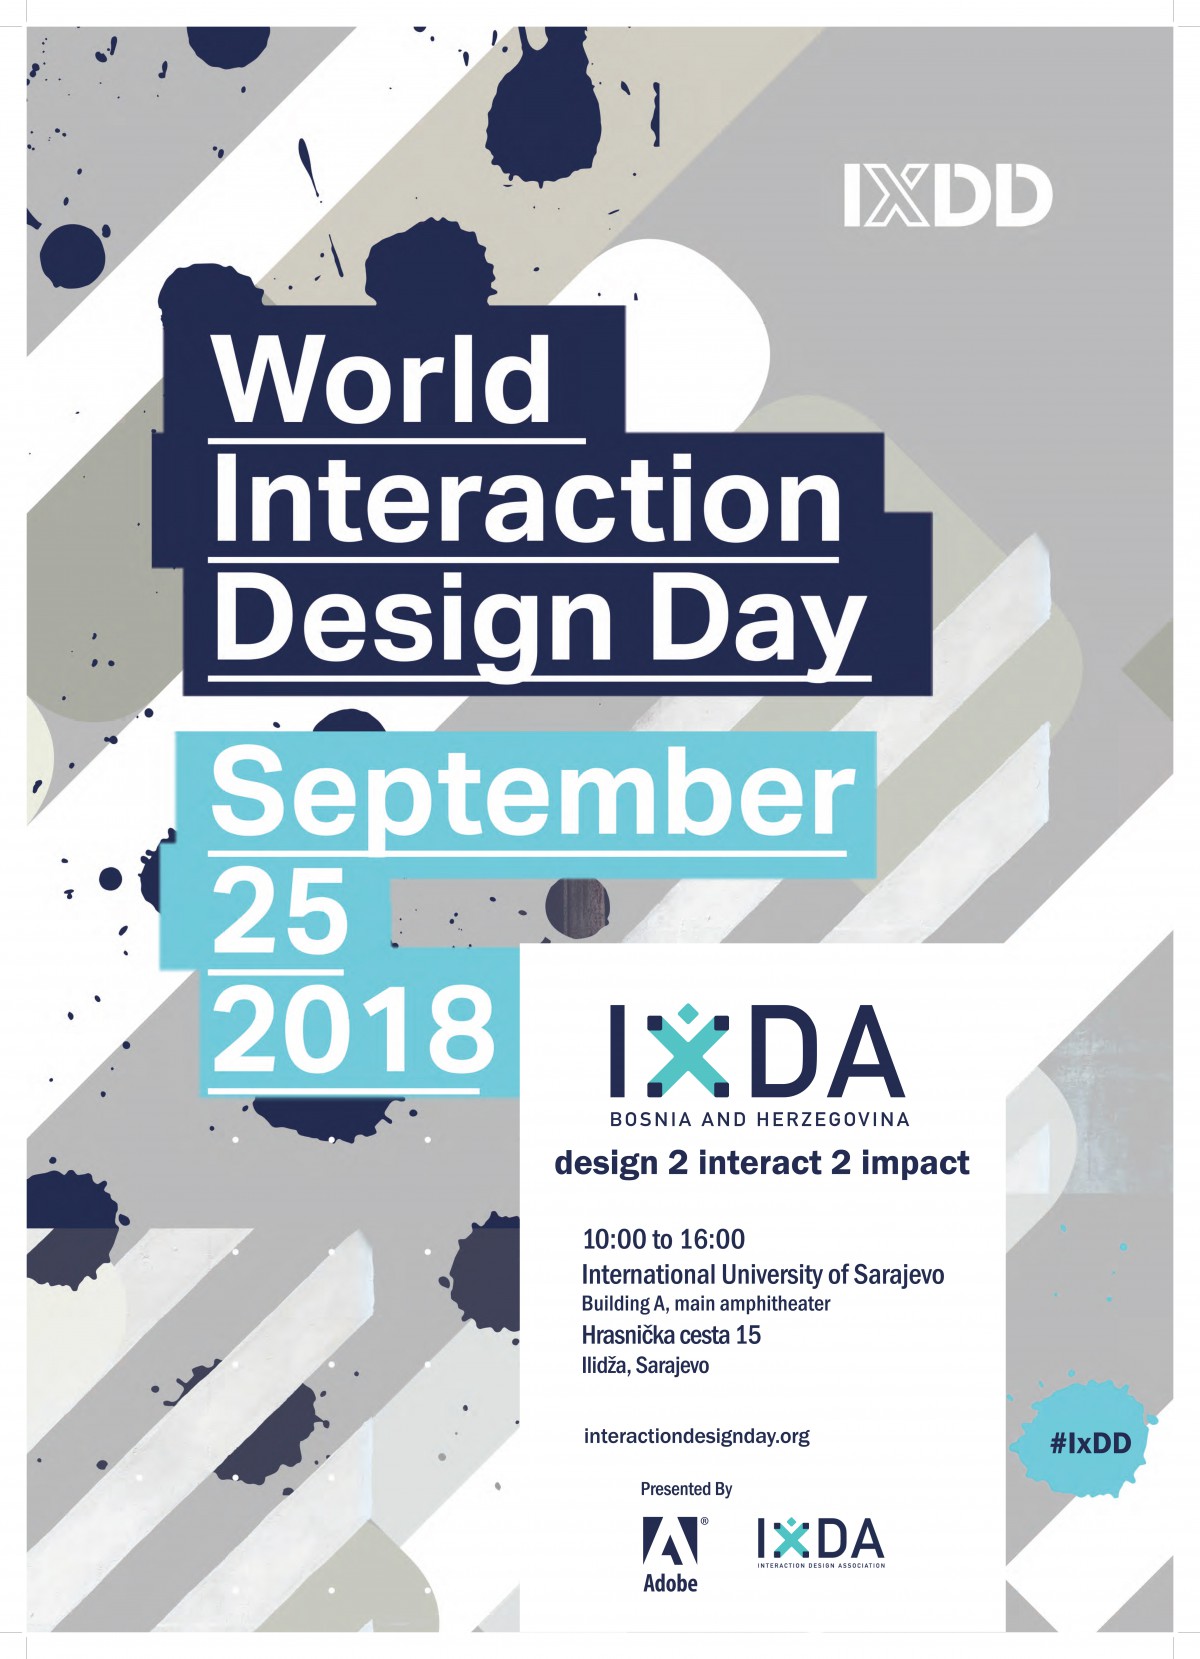  IxDA BiH: Design to Interact to Impact 